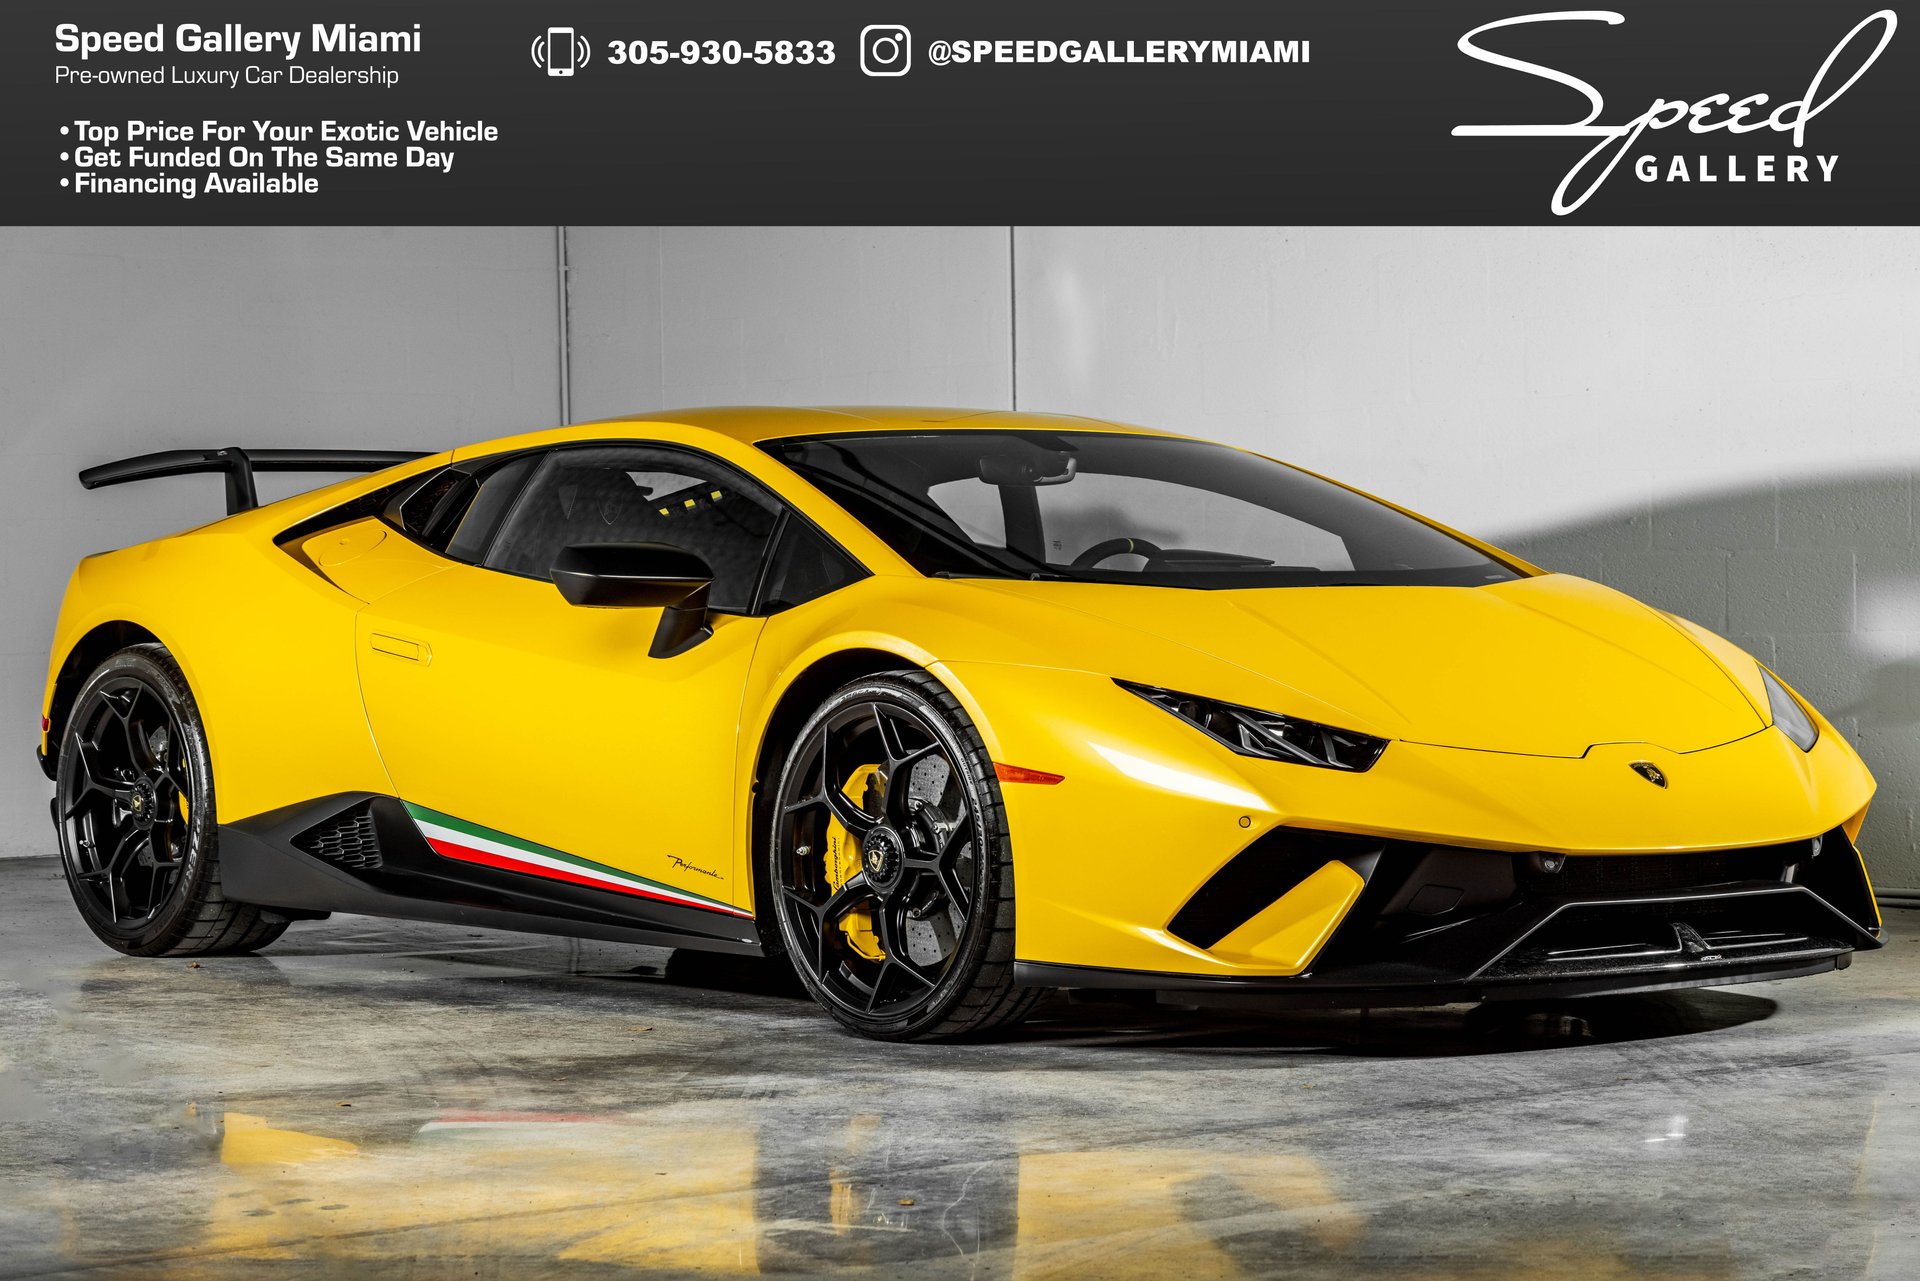 2018 Lamborghini Huracan Performante Coupe | Speed Gallery Miami